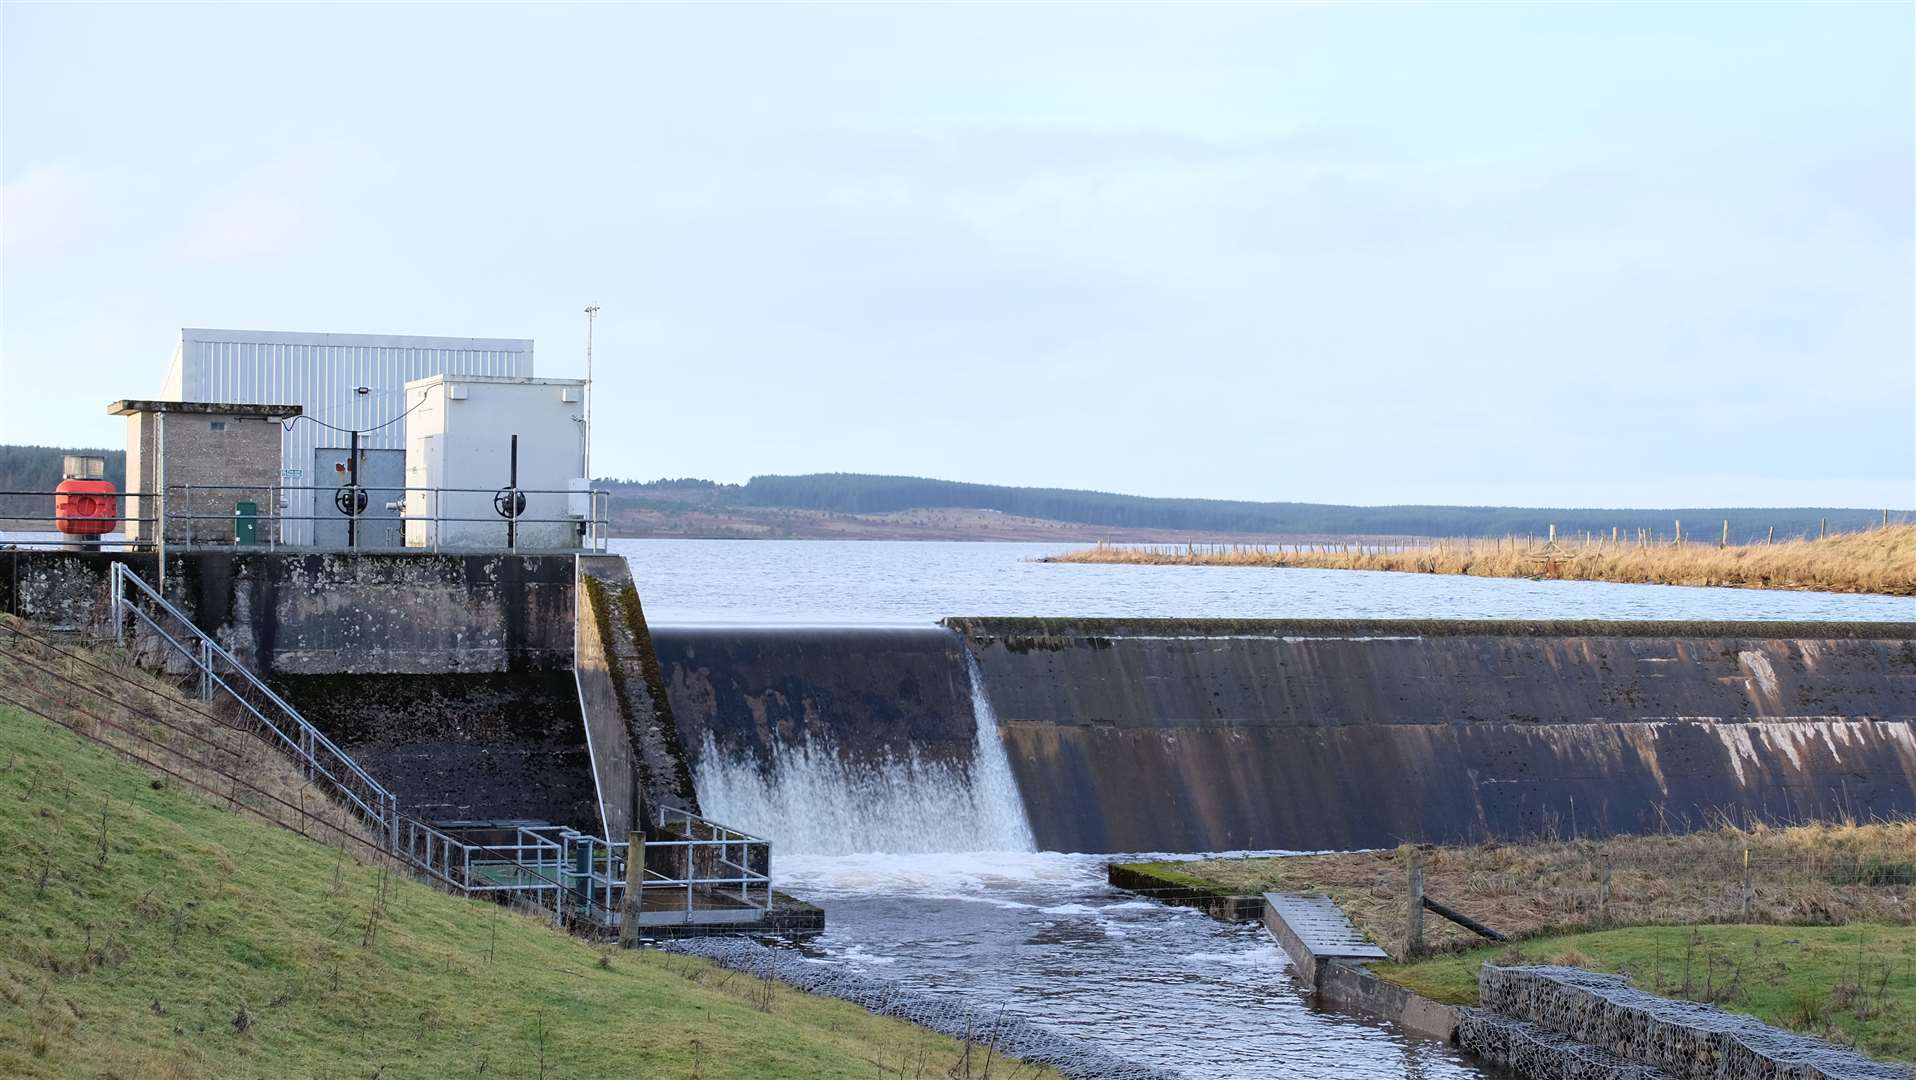 Ian Cameron sent this image of Achavarn Dam, Loch Calder, on Christmas Day.